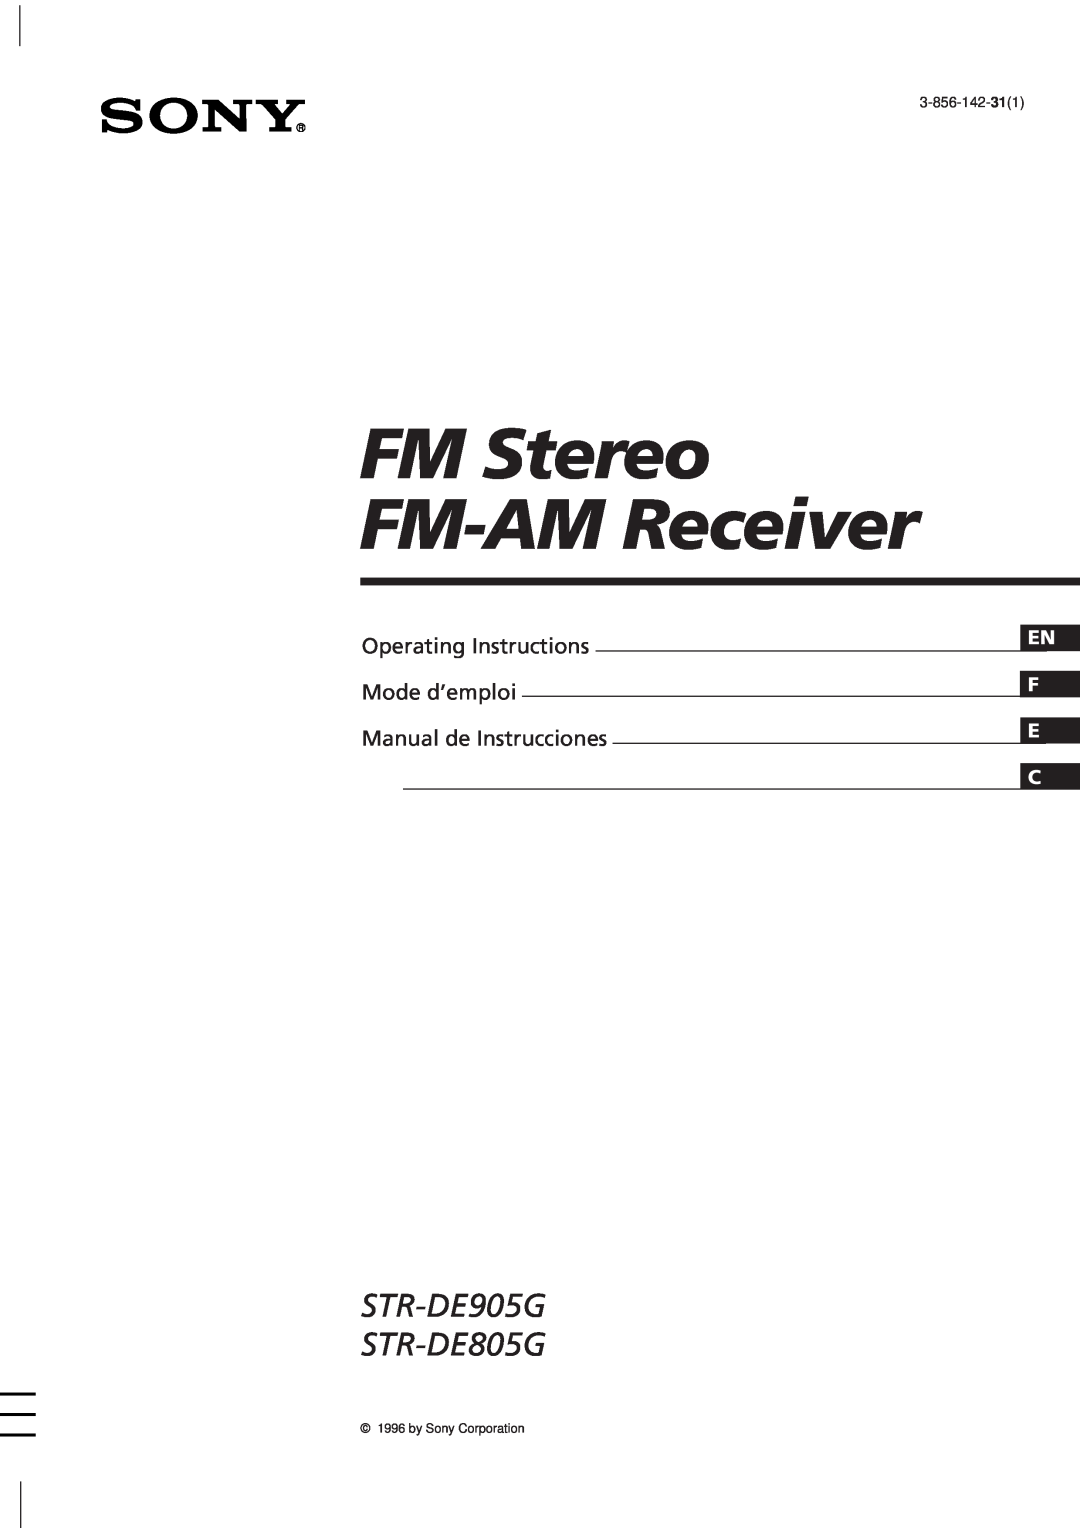 Sony manual FM Stereo FM-AMReceiver, STR-DE905G STR-DE805G, Operating Instructions, Mode d’emploi, by Sony Corporation 